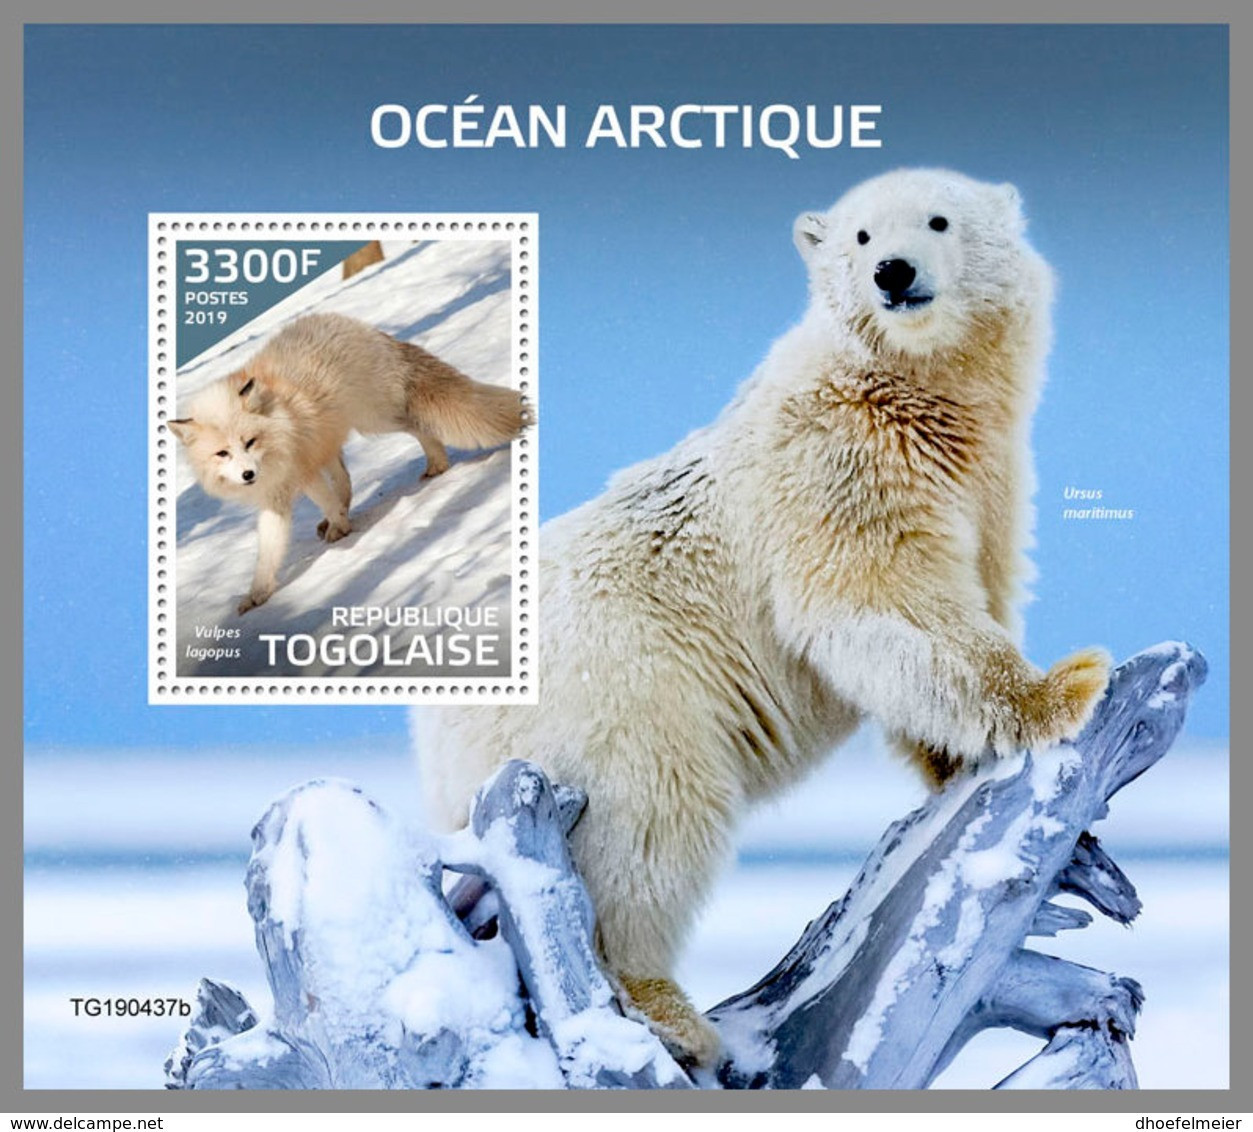 TOGO 2019 MNH Arctic Oceans Arktische Tierwelt Ocean Arctique S/S - OFFICIAL ISSUE - DH1946 - Faune Arctique